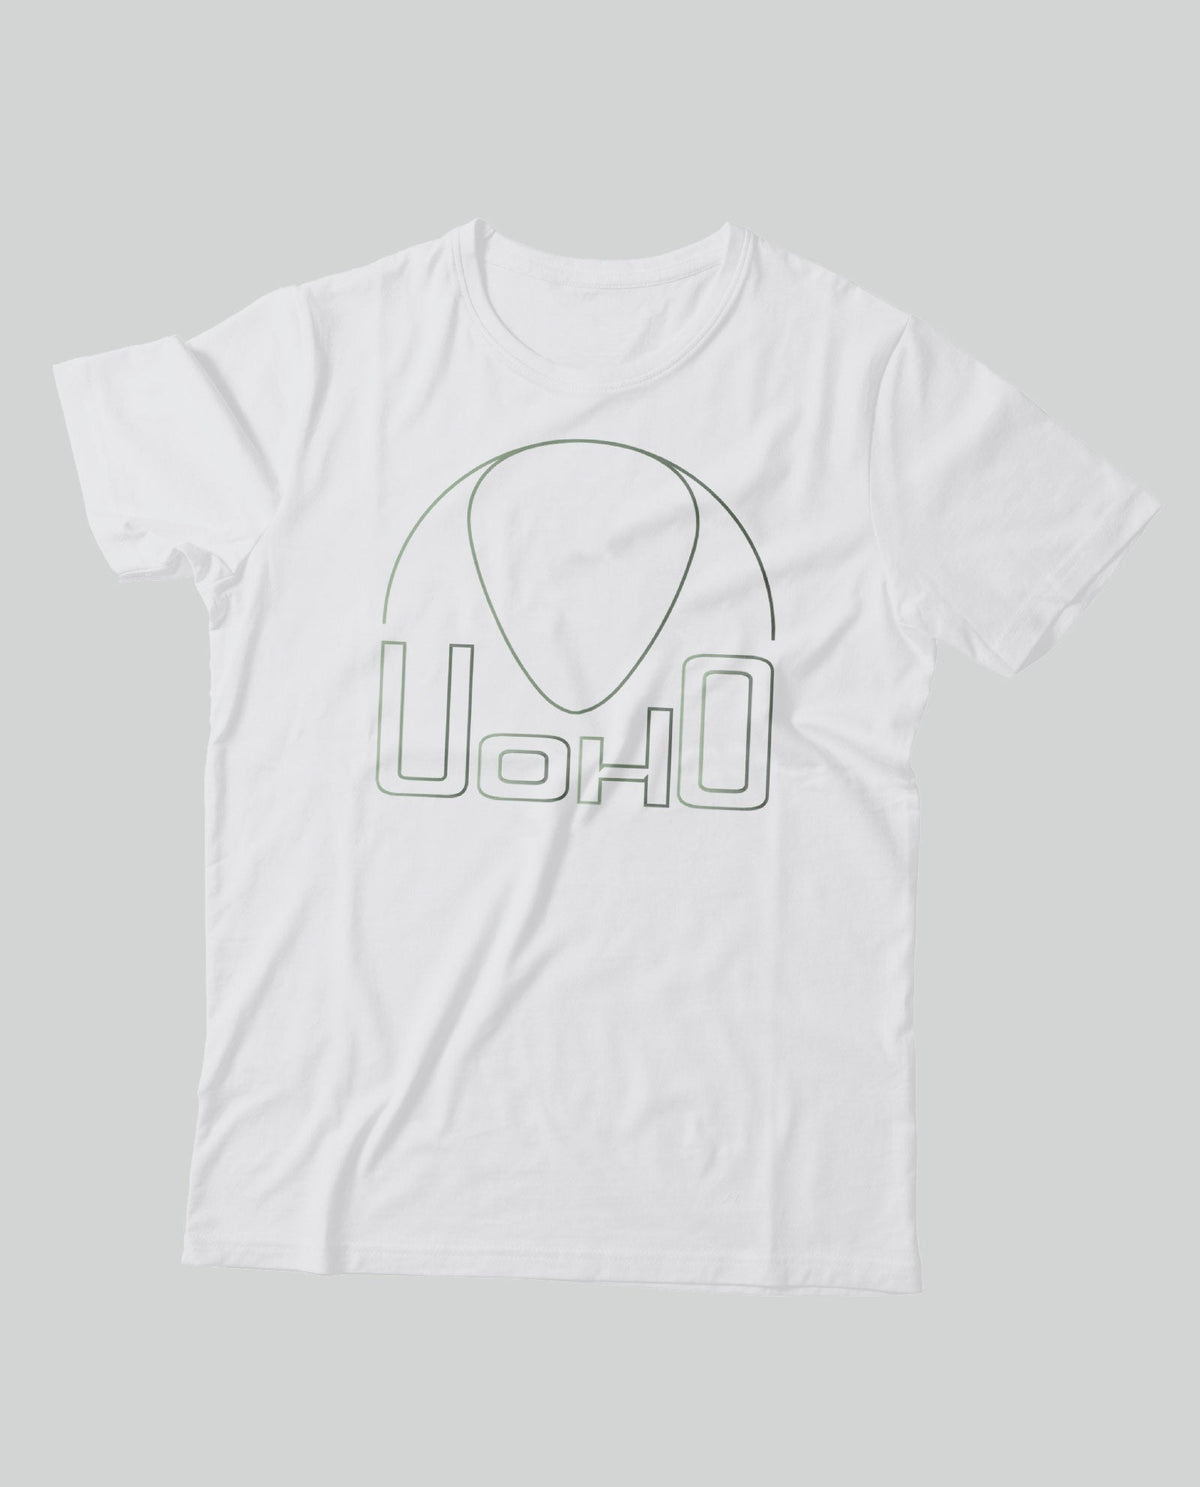 Camiseta "Pua Sencilla" Blanca - UOHO - Rocktud - Uoho